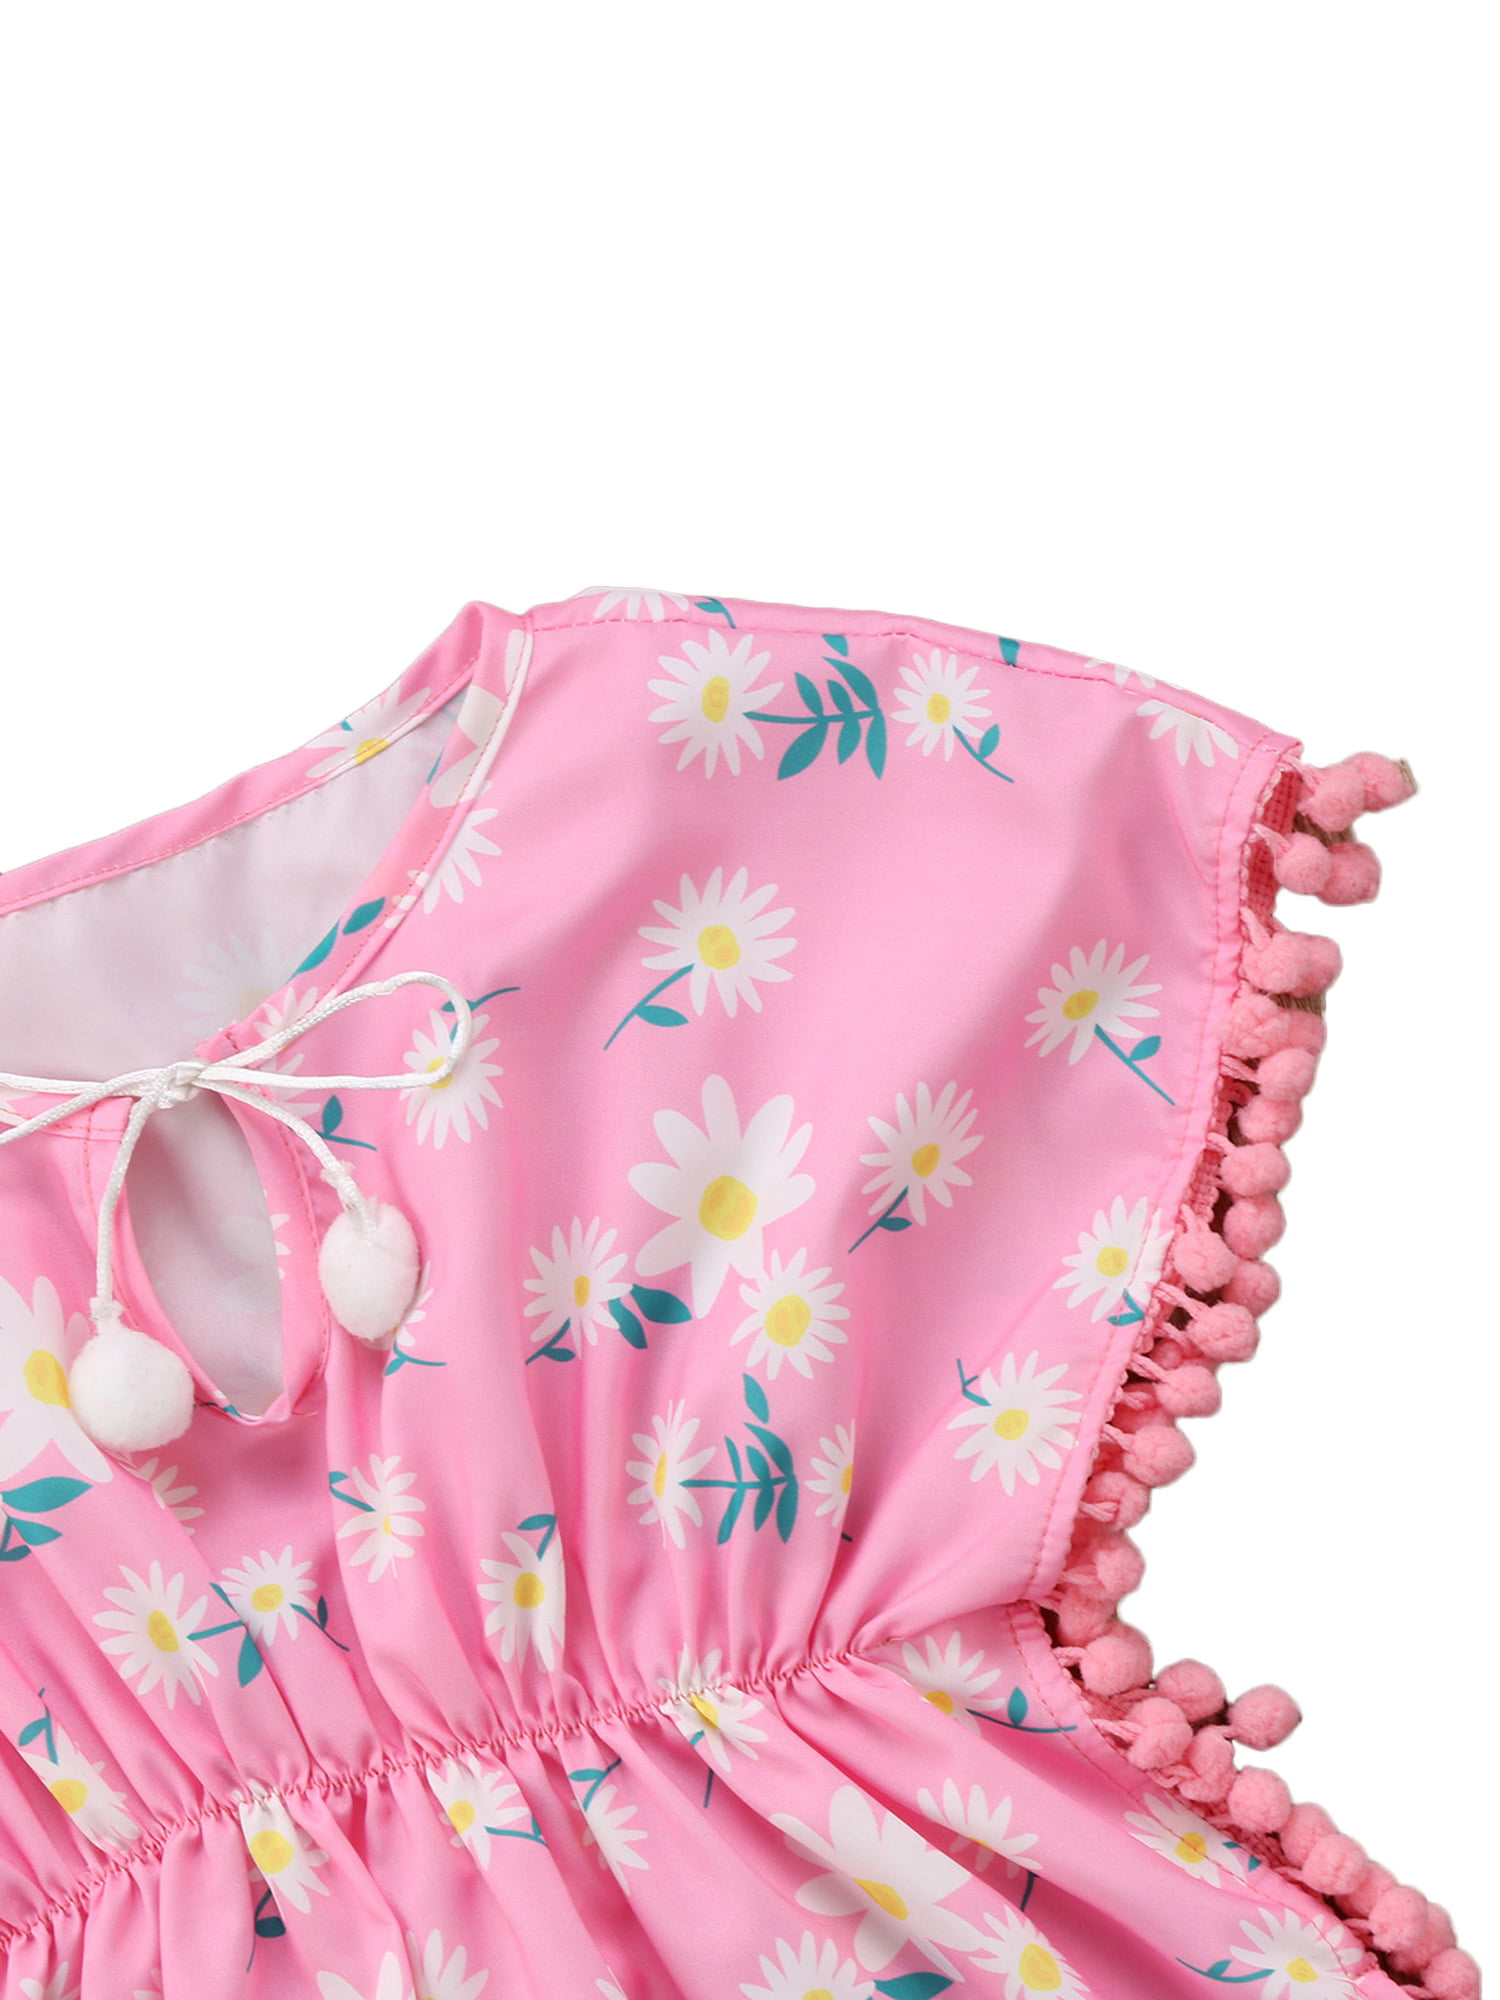 FINELOOK FINELOOK Toddler Baby Girls Swimwear Bikini Cover Up Pom Pom Tassel Poncho Beach Sundress 